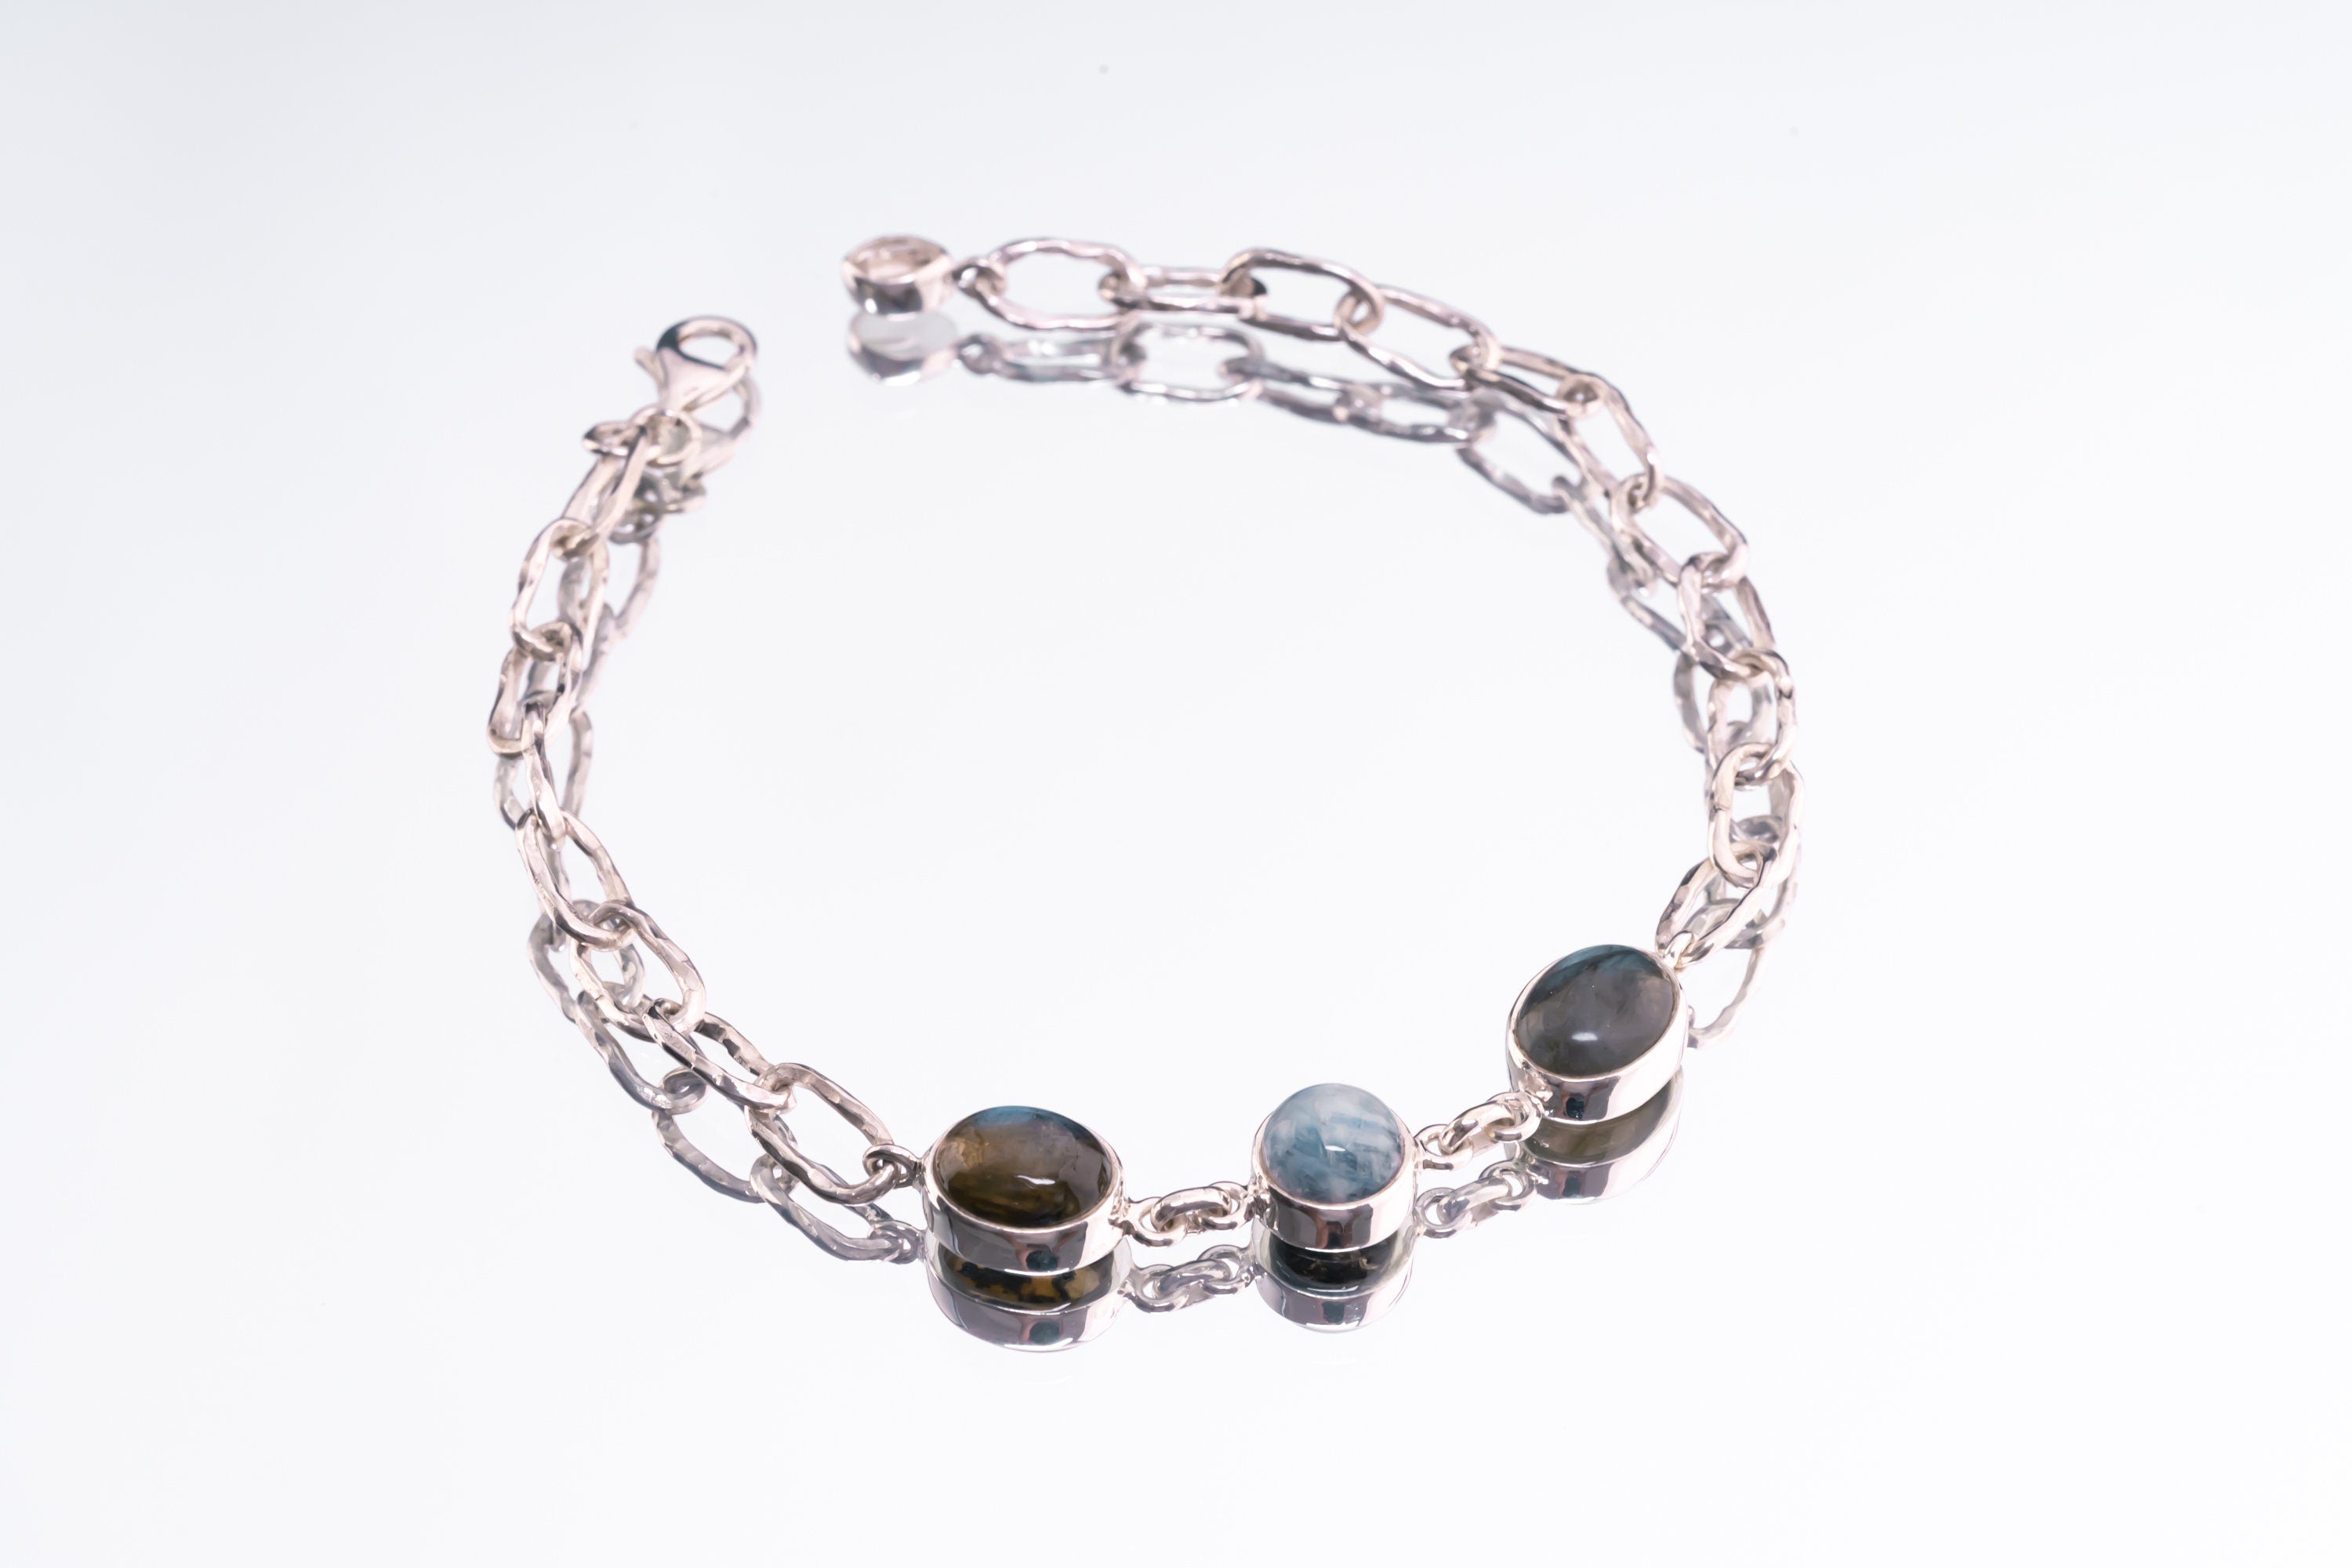 Celestial Silver Bracelet: Moonstone, Labradorite & Herkimer Diamond - Sterling Silver - Shiny and Polish Finish